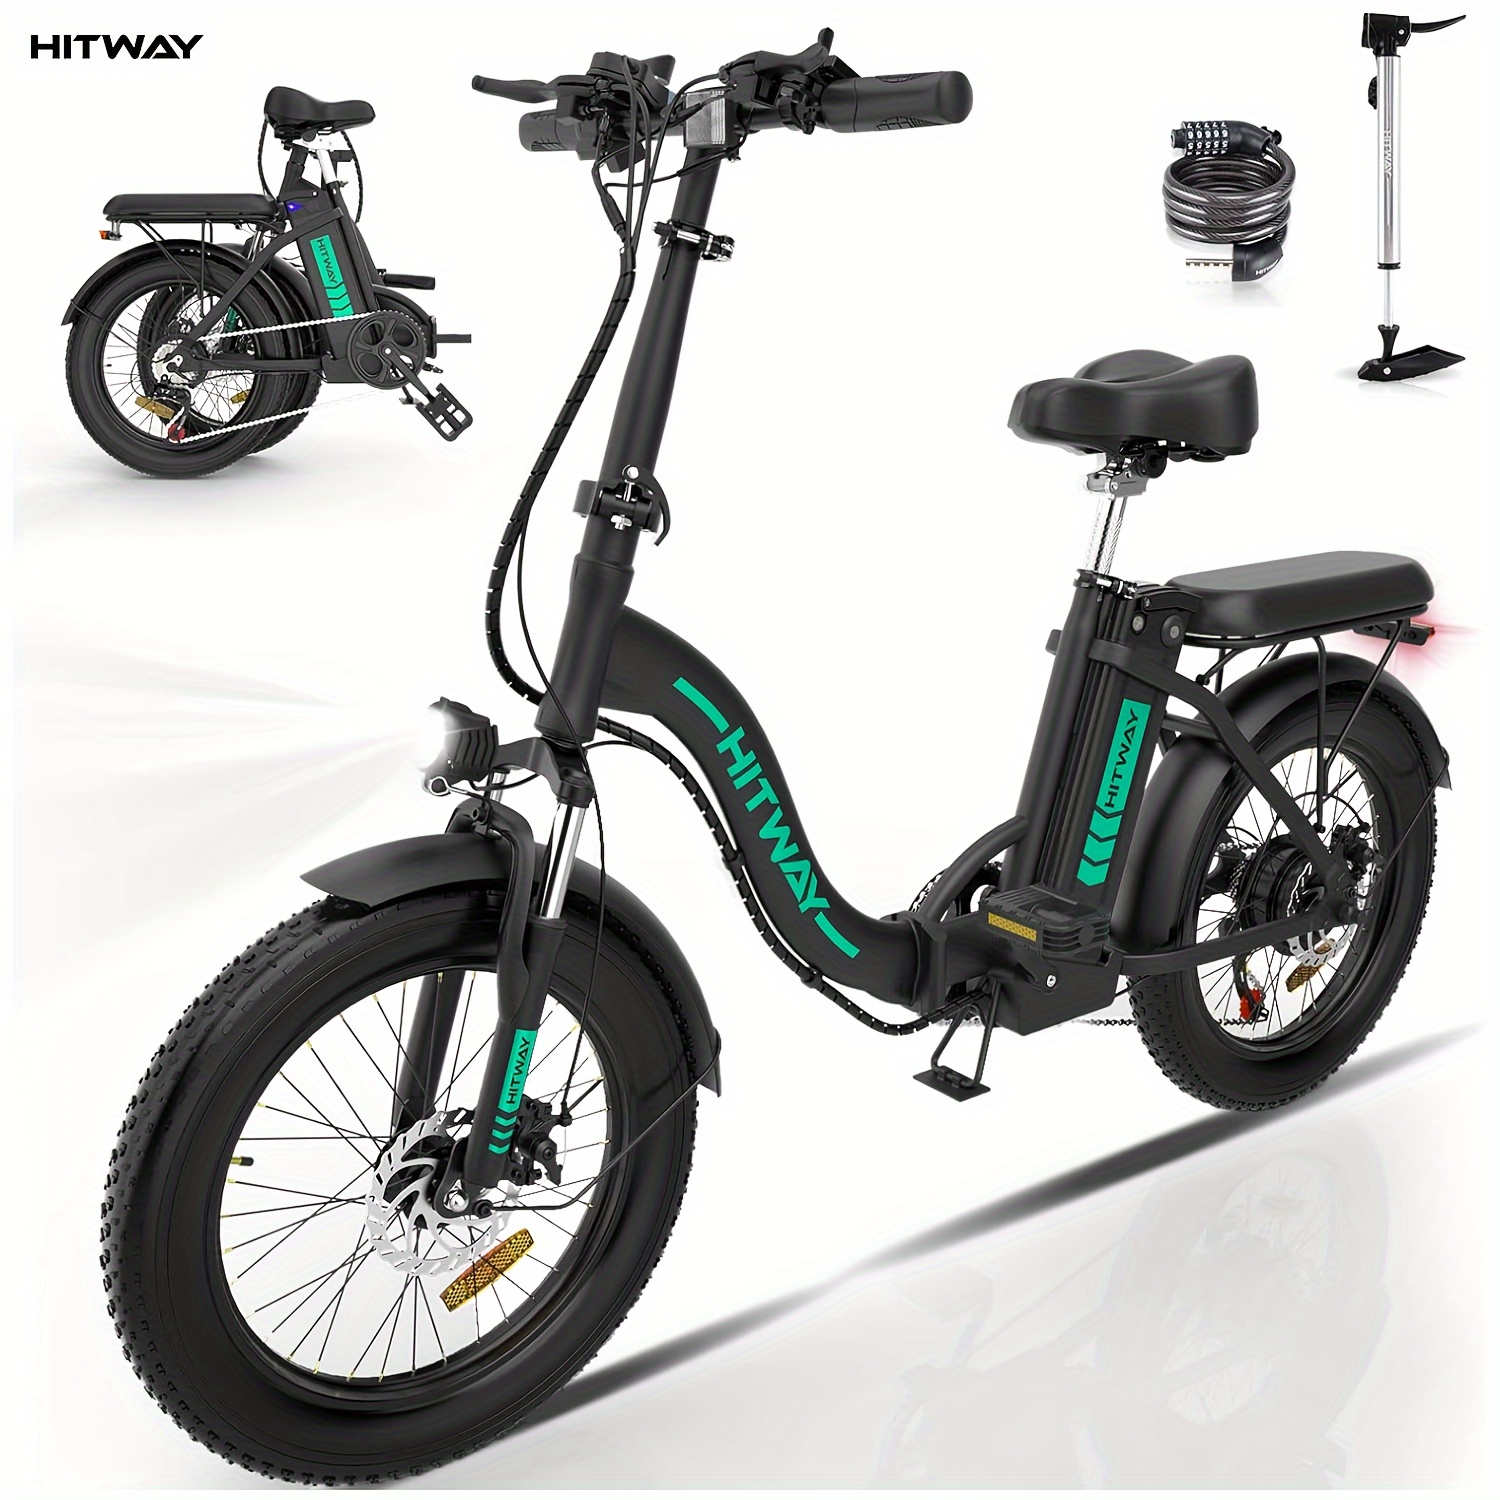 

Hitway Bk6m Electric Bike For Adults, 20" Fat Tire E Bike 750w 20mph Removable Folding Electric Bike, 48v/14ah Battery 55-120km, Mountain Bike Snow Beach Bicycle With 7 Gears